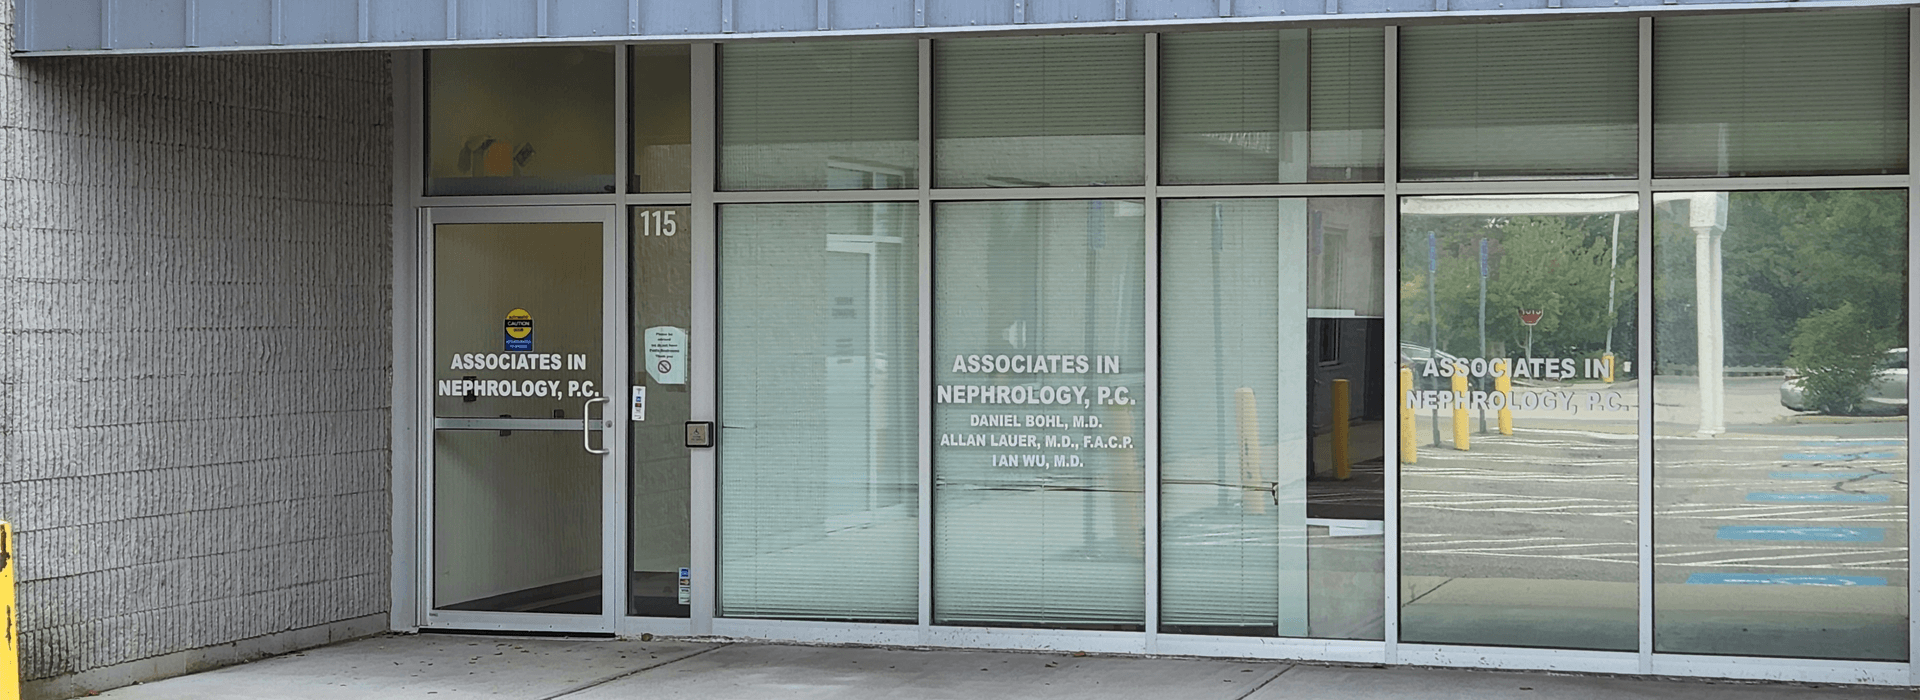 entrance of Associates in Nephrology's office